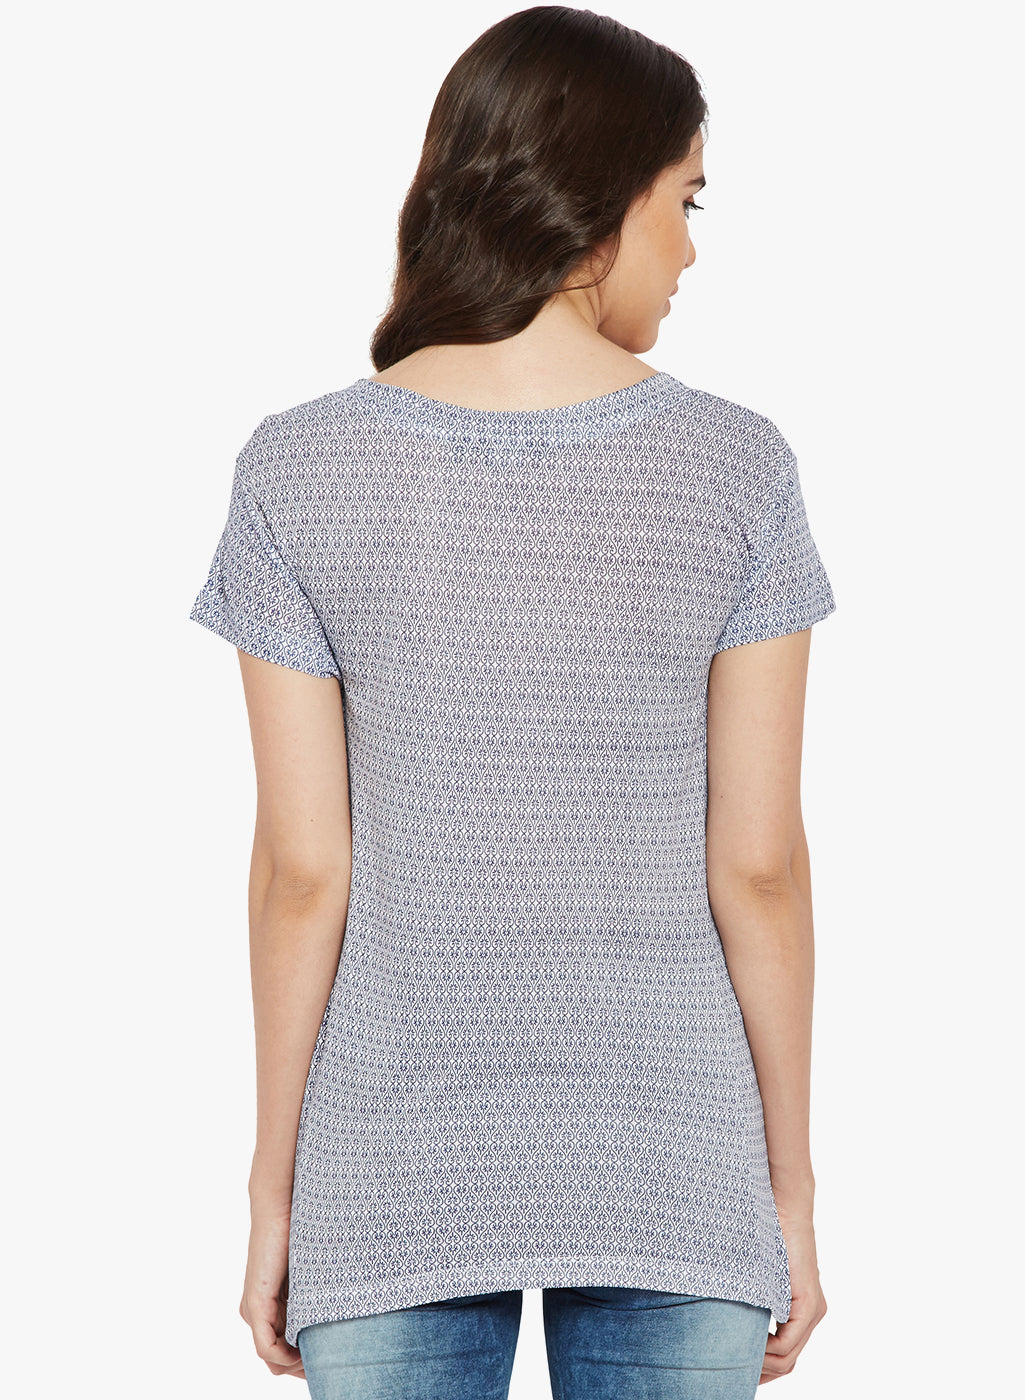 Grey Printed Round Neck T-Shirt-Women T-Shirts-Crimsoune Club